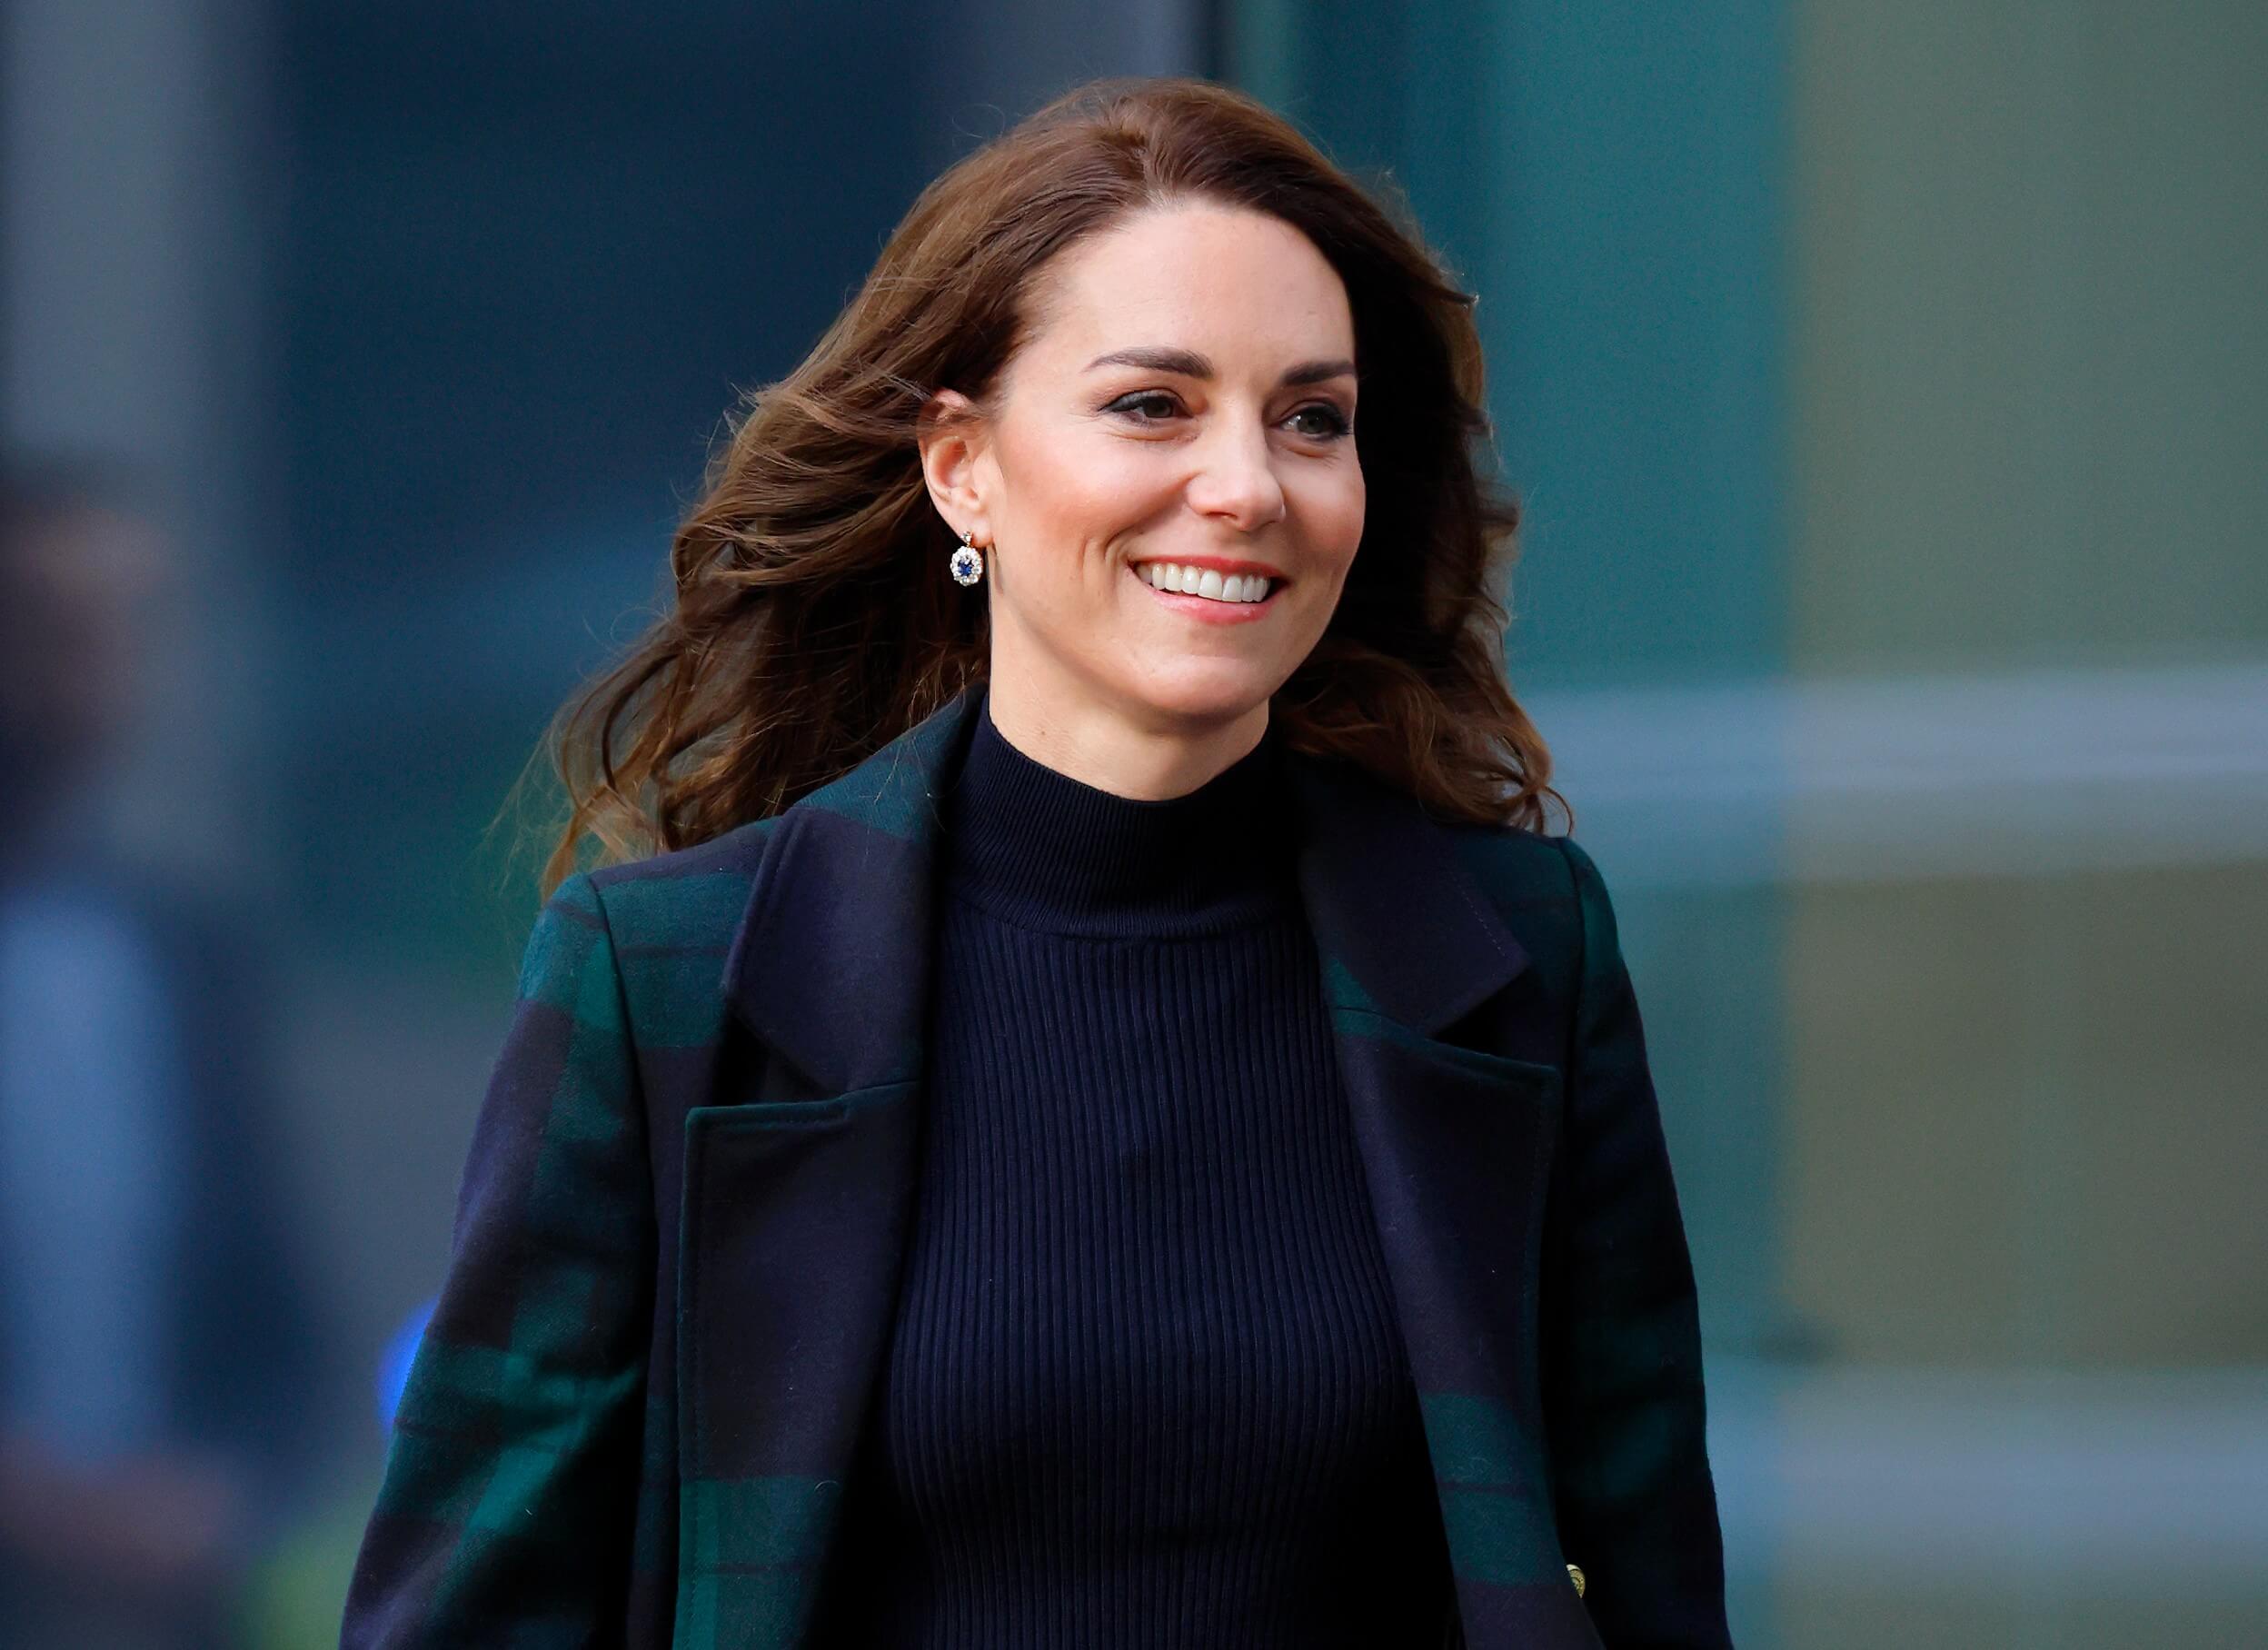 Kate Middleton smiles during a royal engagement.